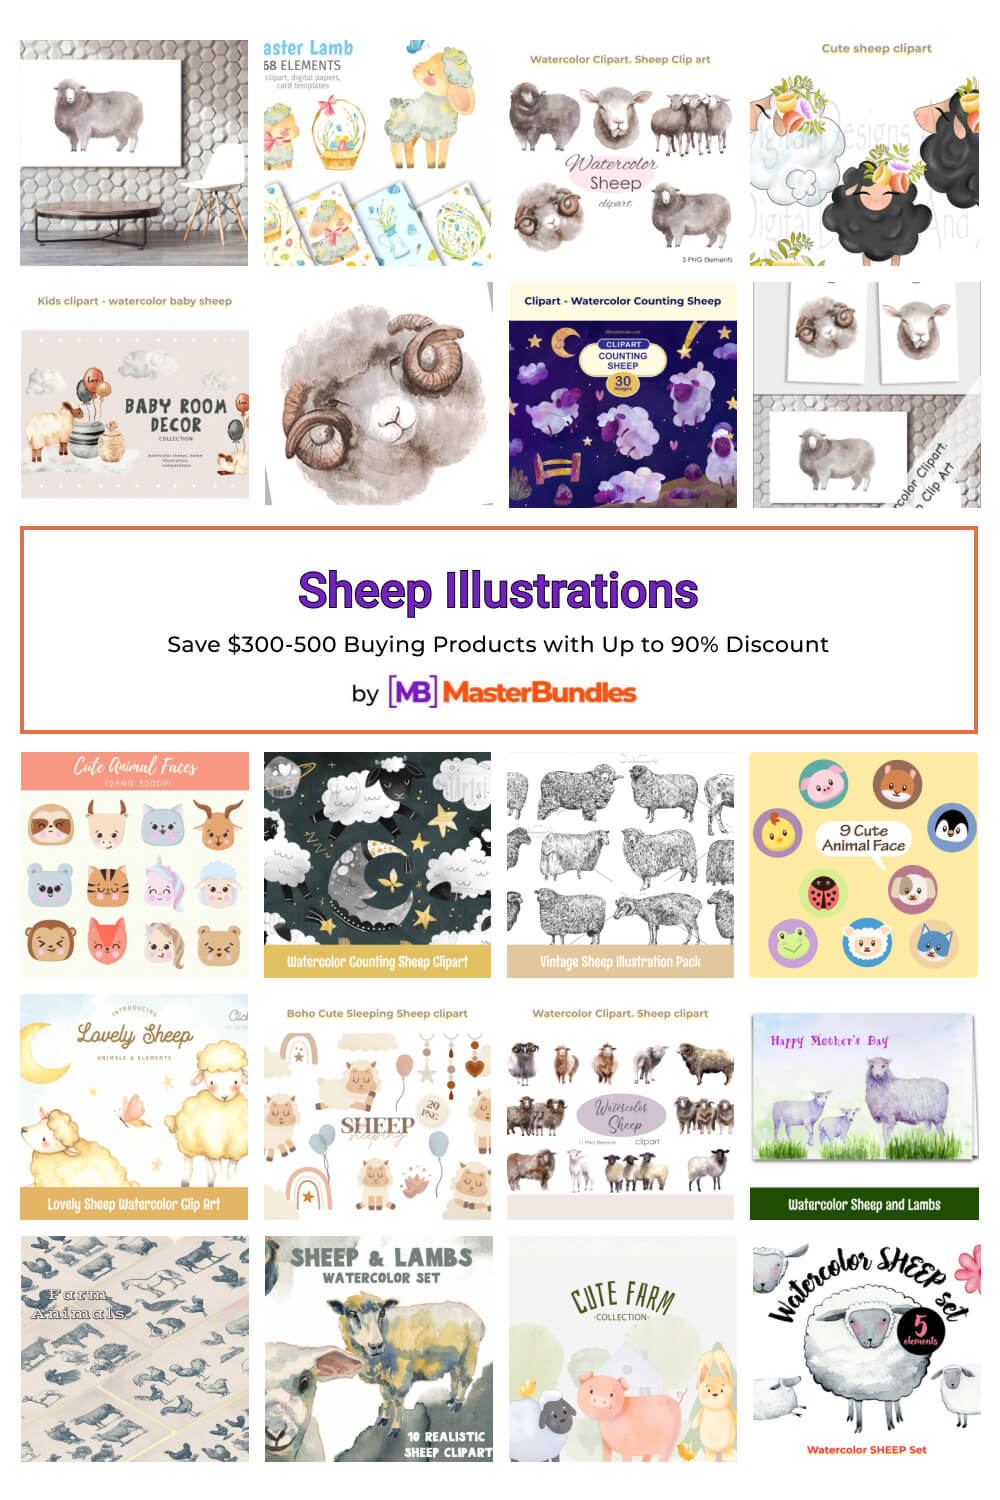 sheep illustrations pinterest image.